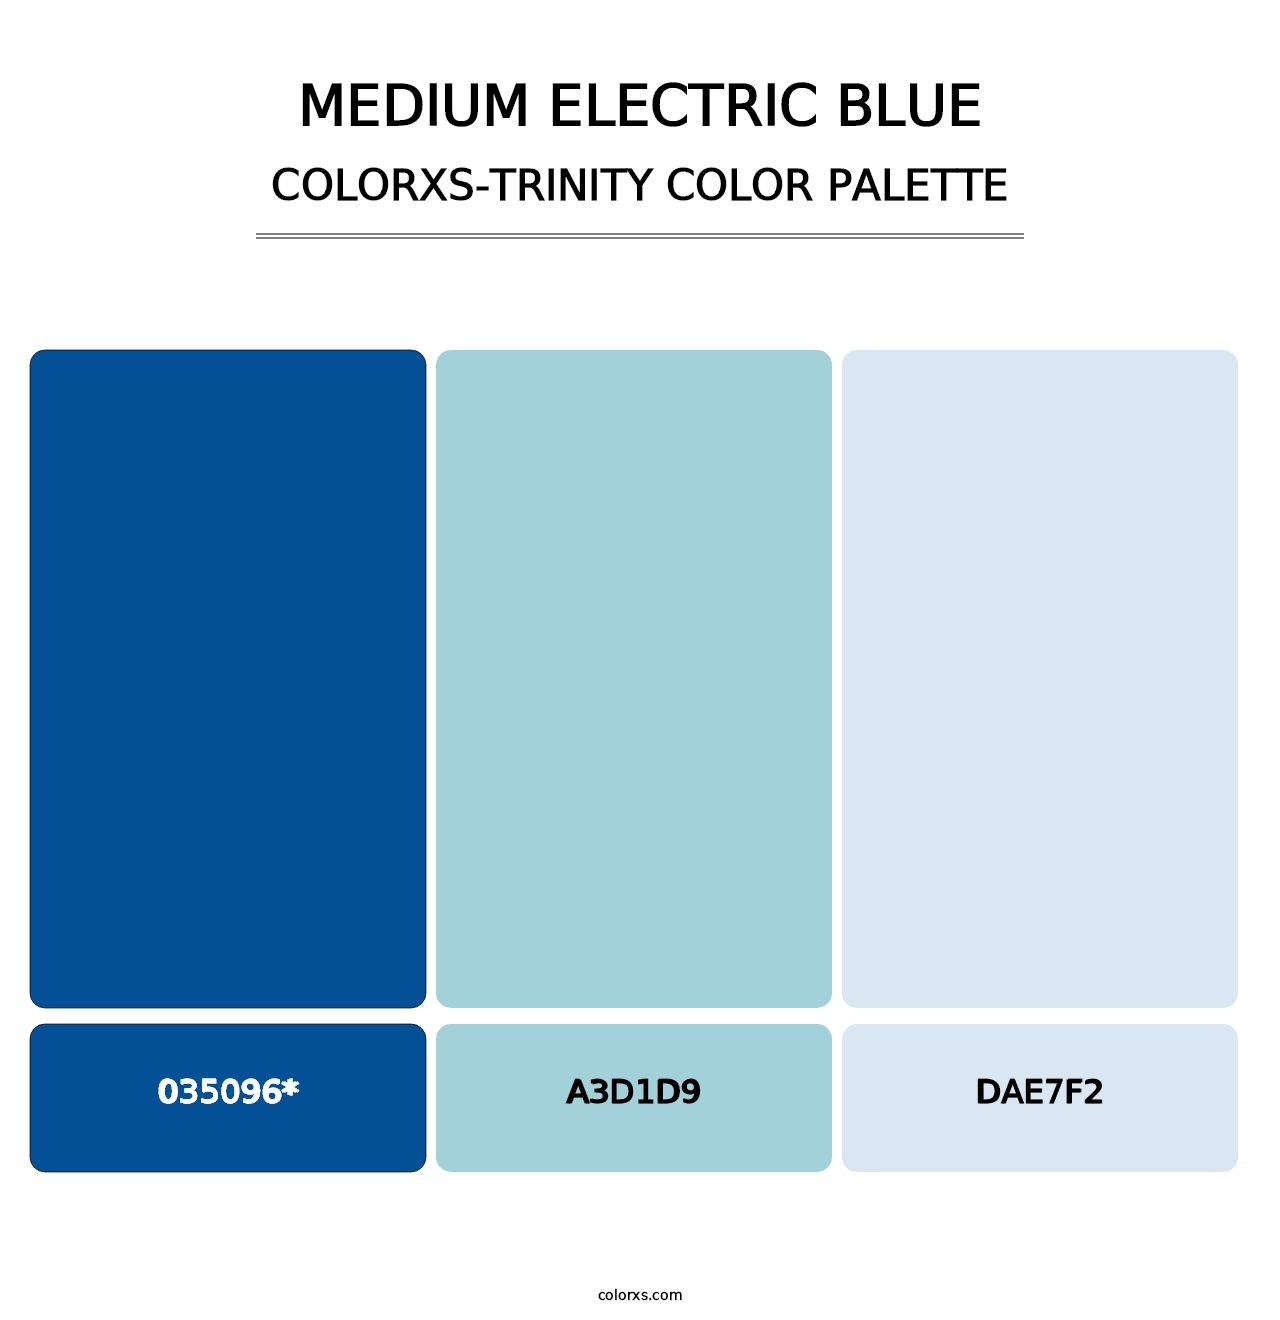 Medium Electric Blue - Colorxs Trinity Palette